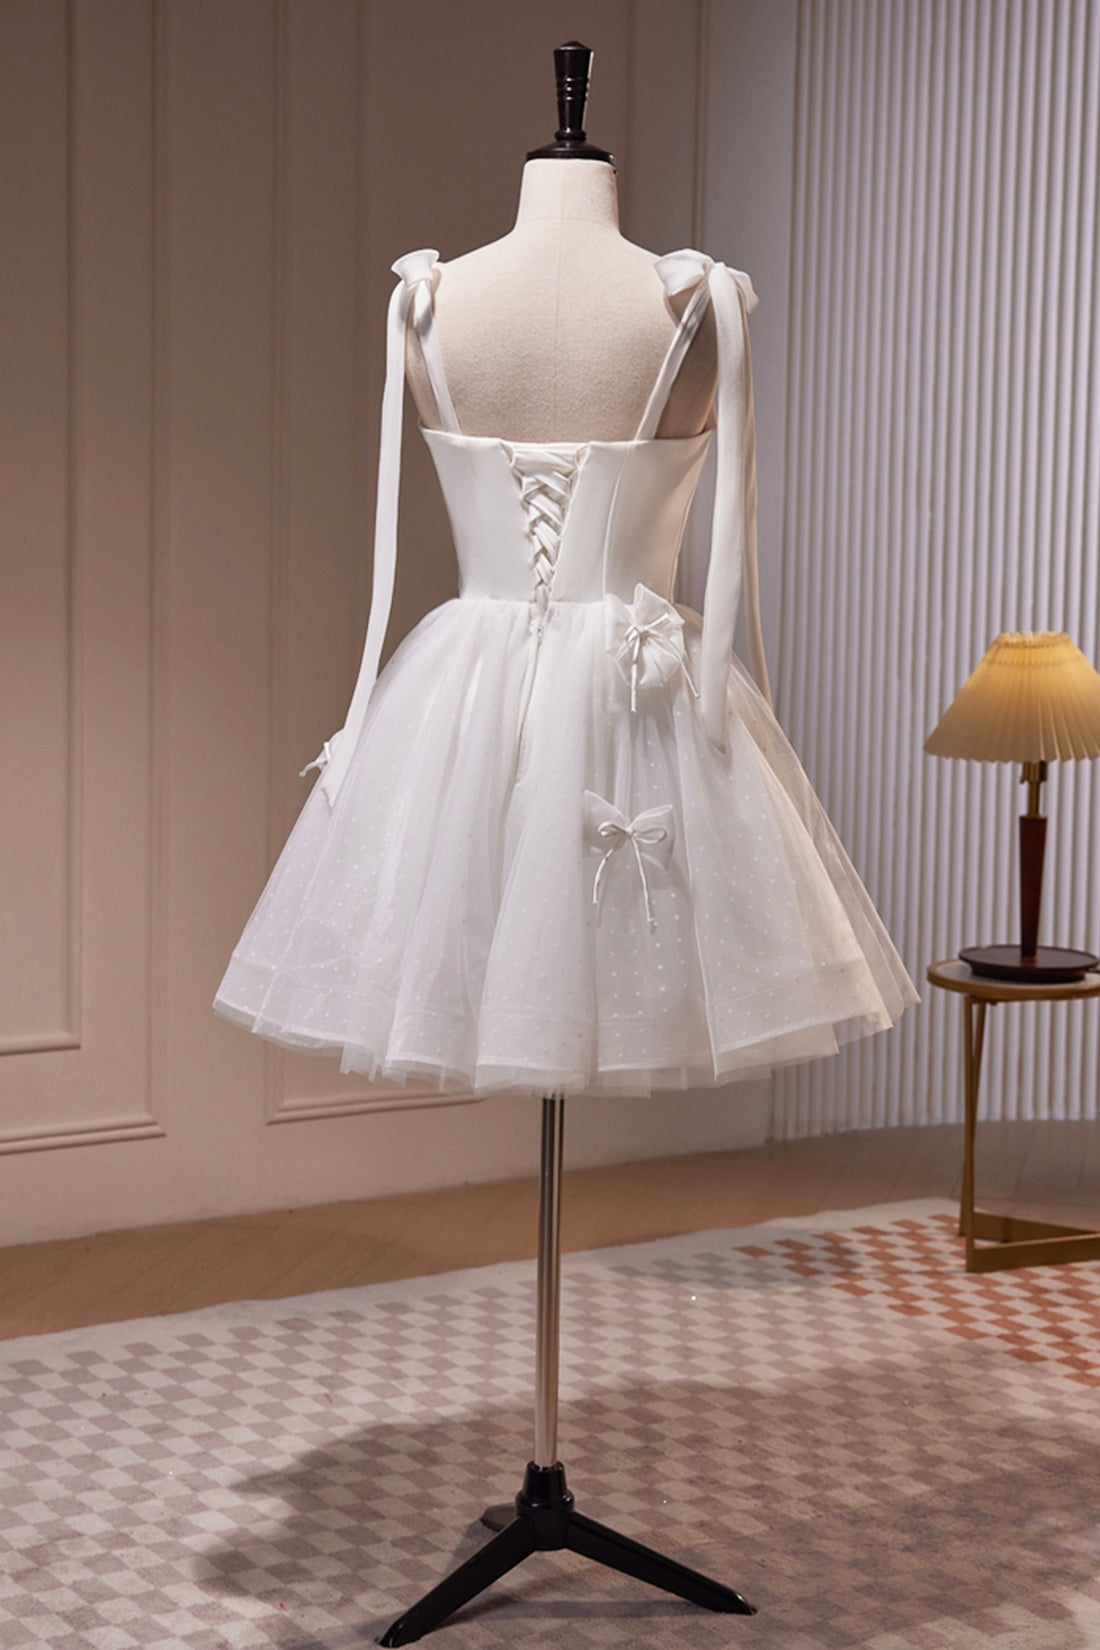 White Tulle Spaghetti Straps Floor Length Party Dress, White Evening Prom Dress US 14 / White